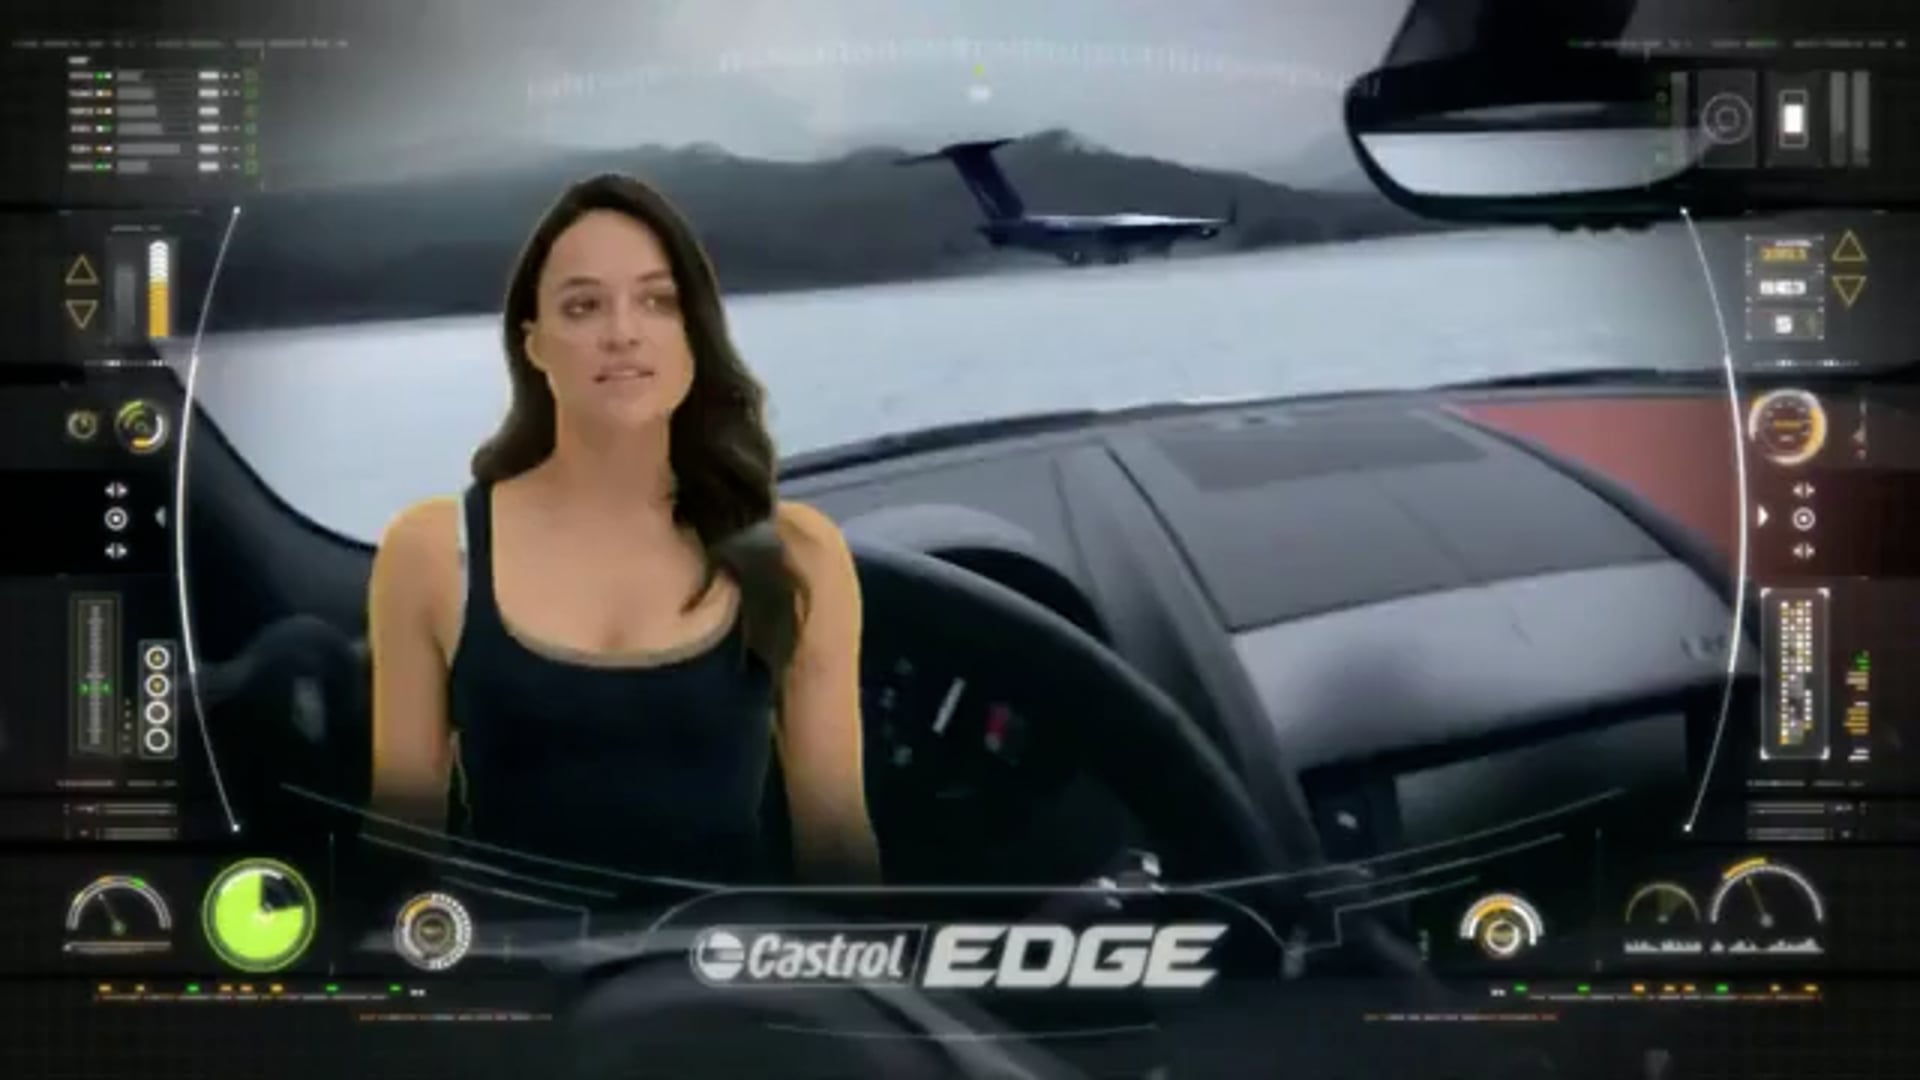 Castrol EDGE TV Commercial, 'Titanium Ice' Featuring Michelle Rodriguez - iSpottv